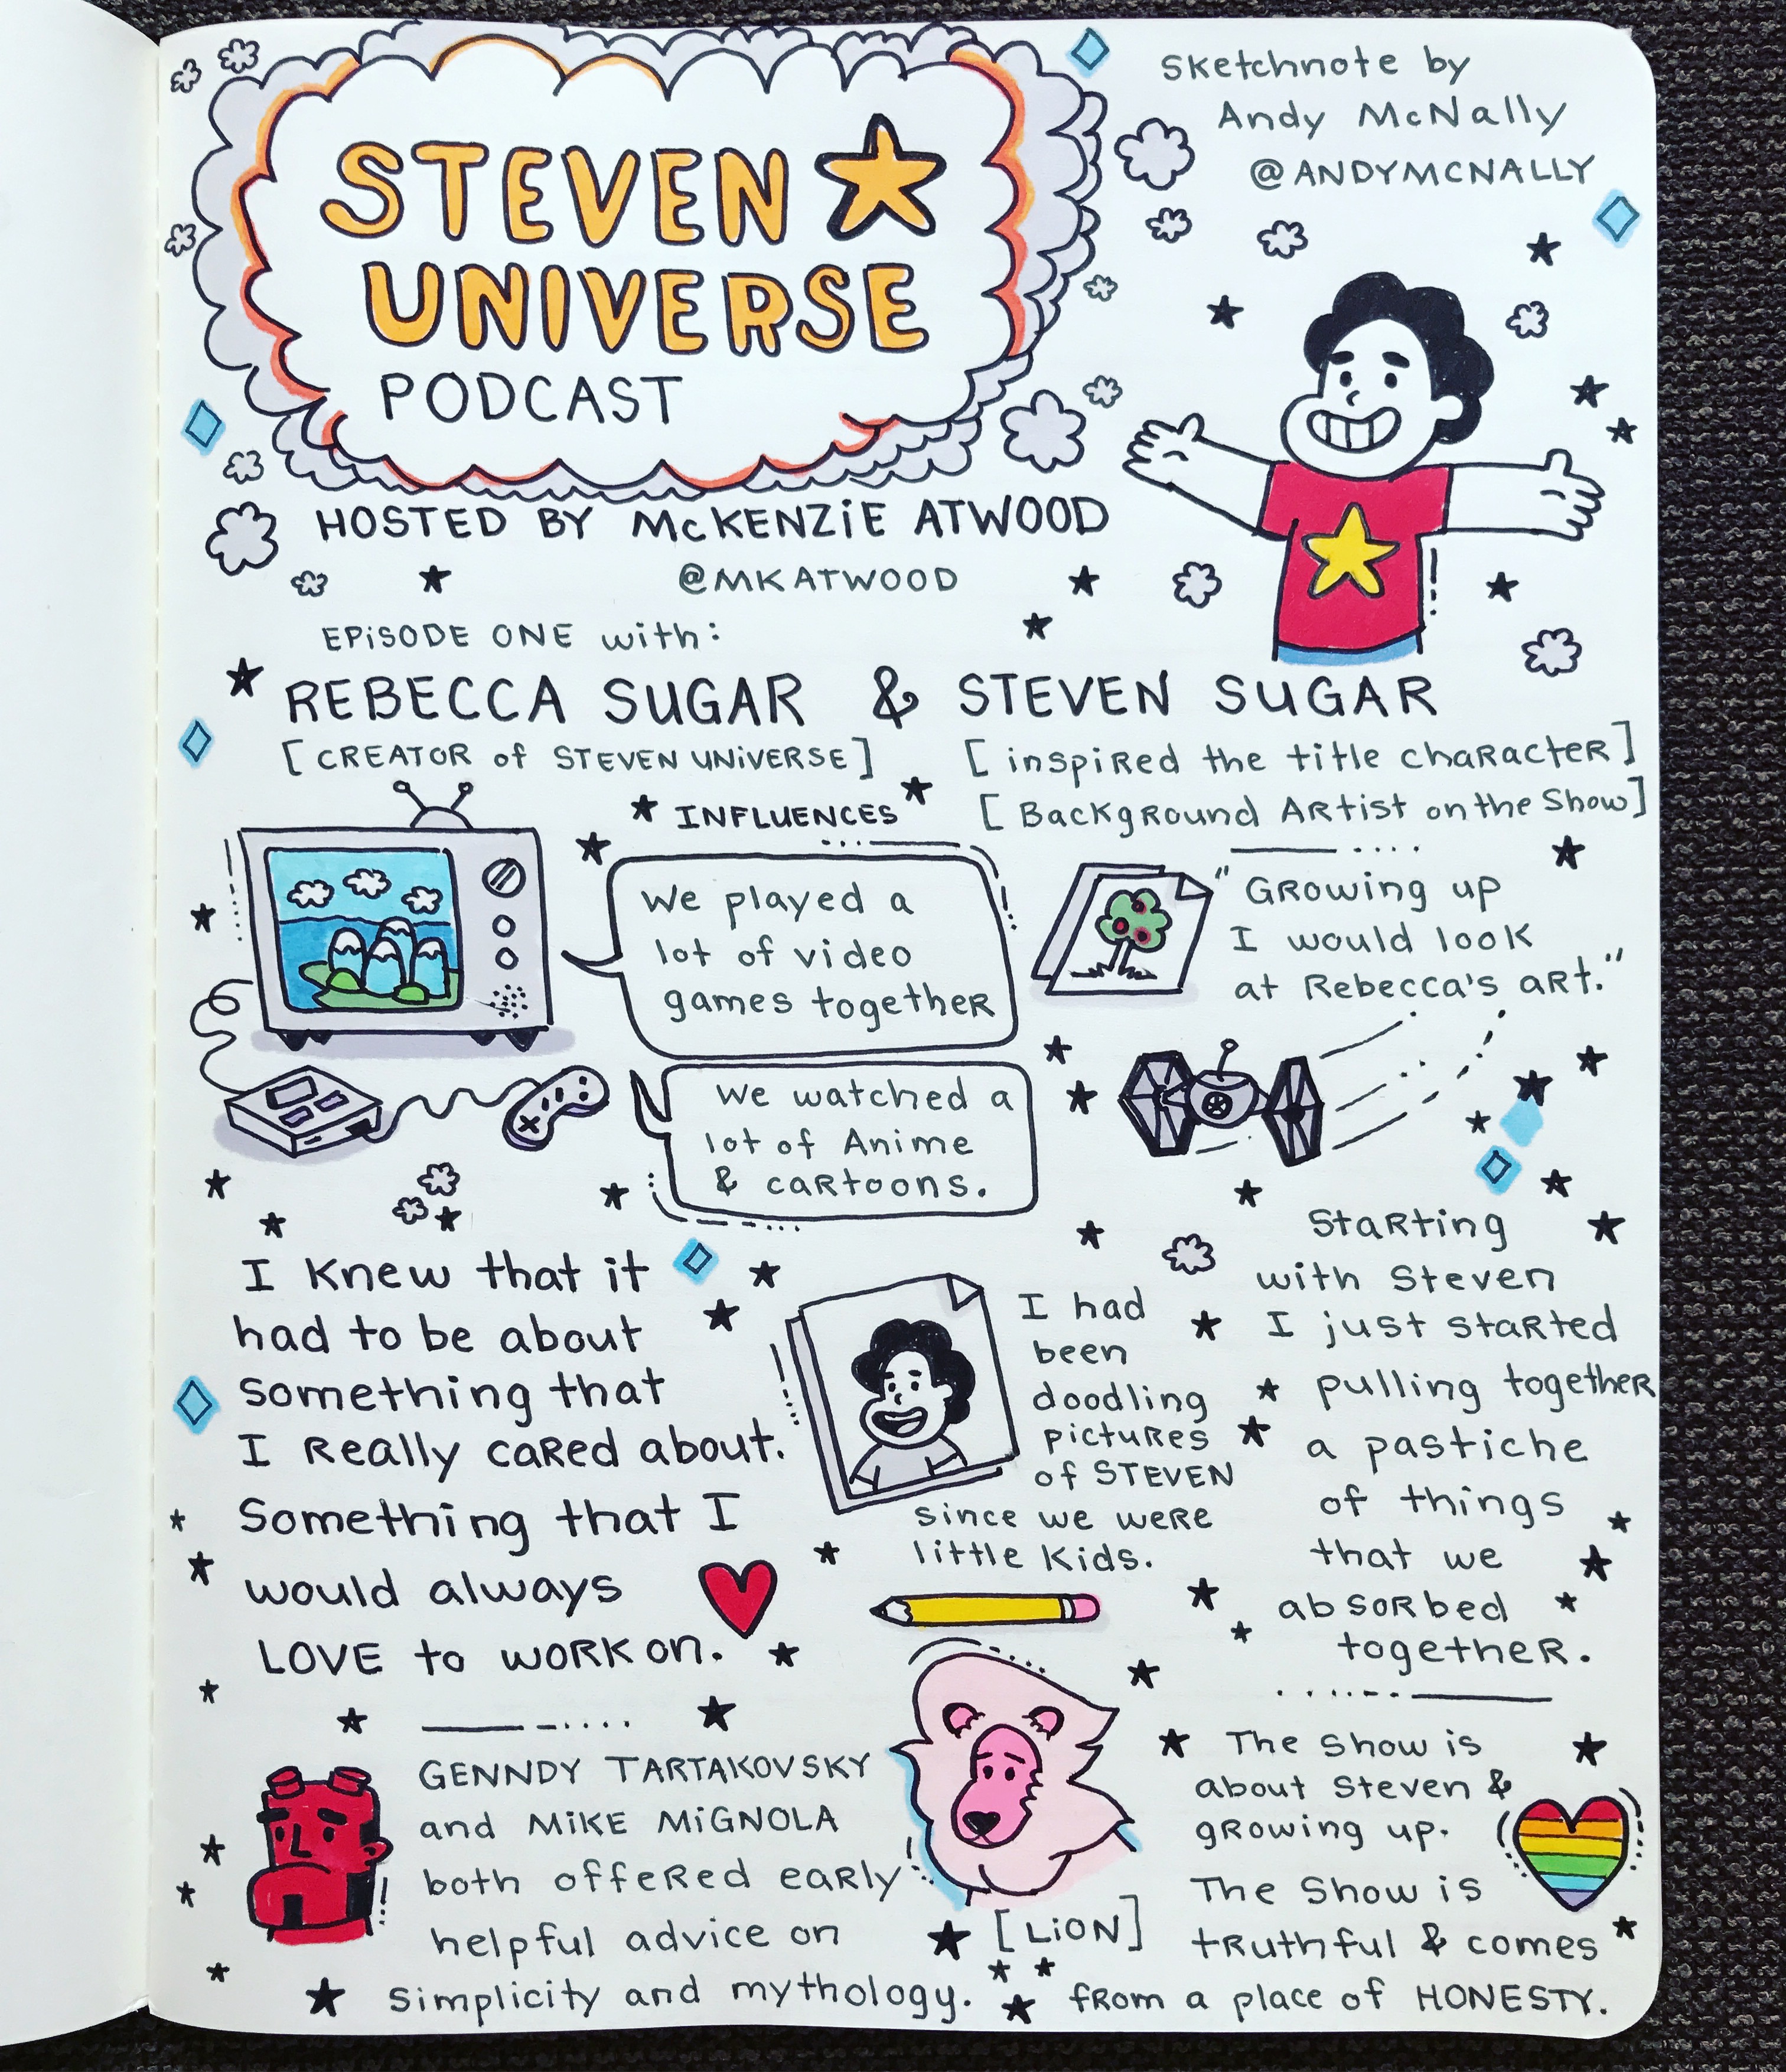 Steven Universe Podcast sketchnote